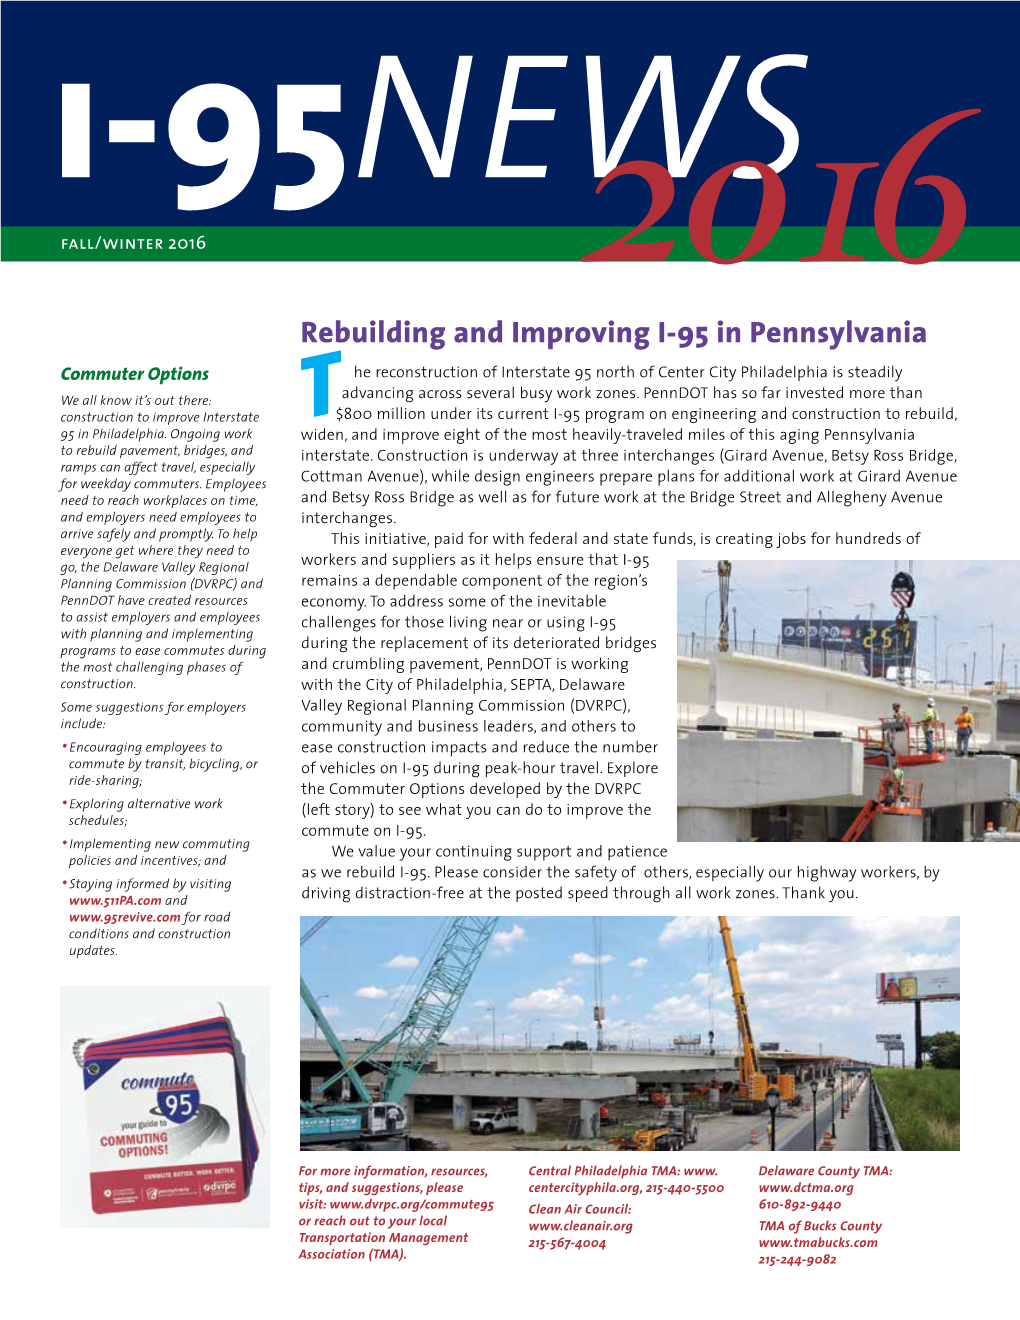 Rebuilding and Improving I-95 in Pennsylvania